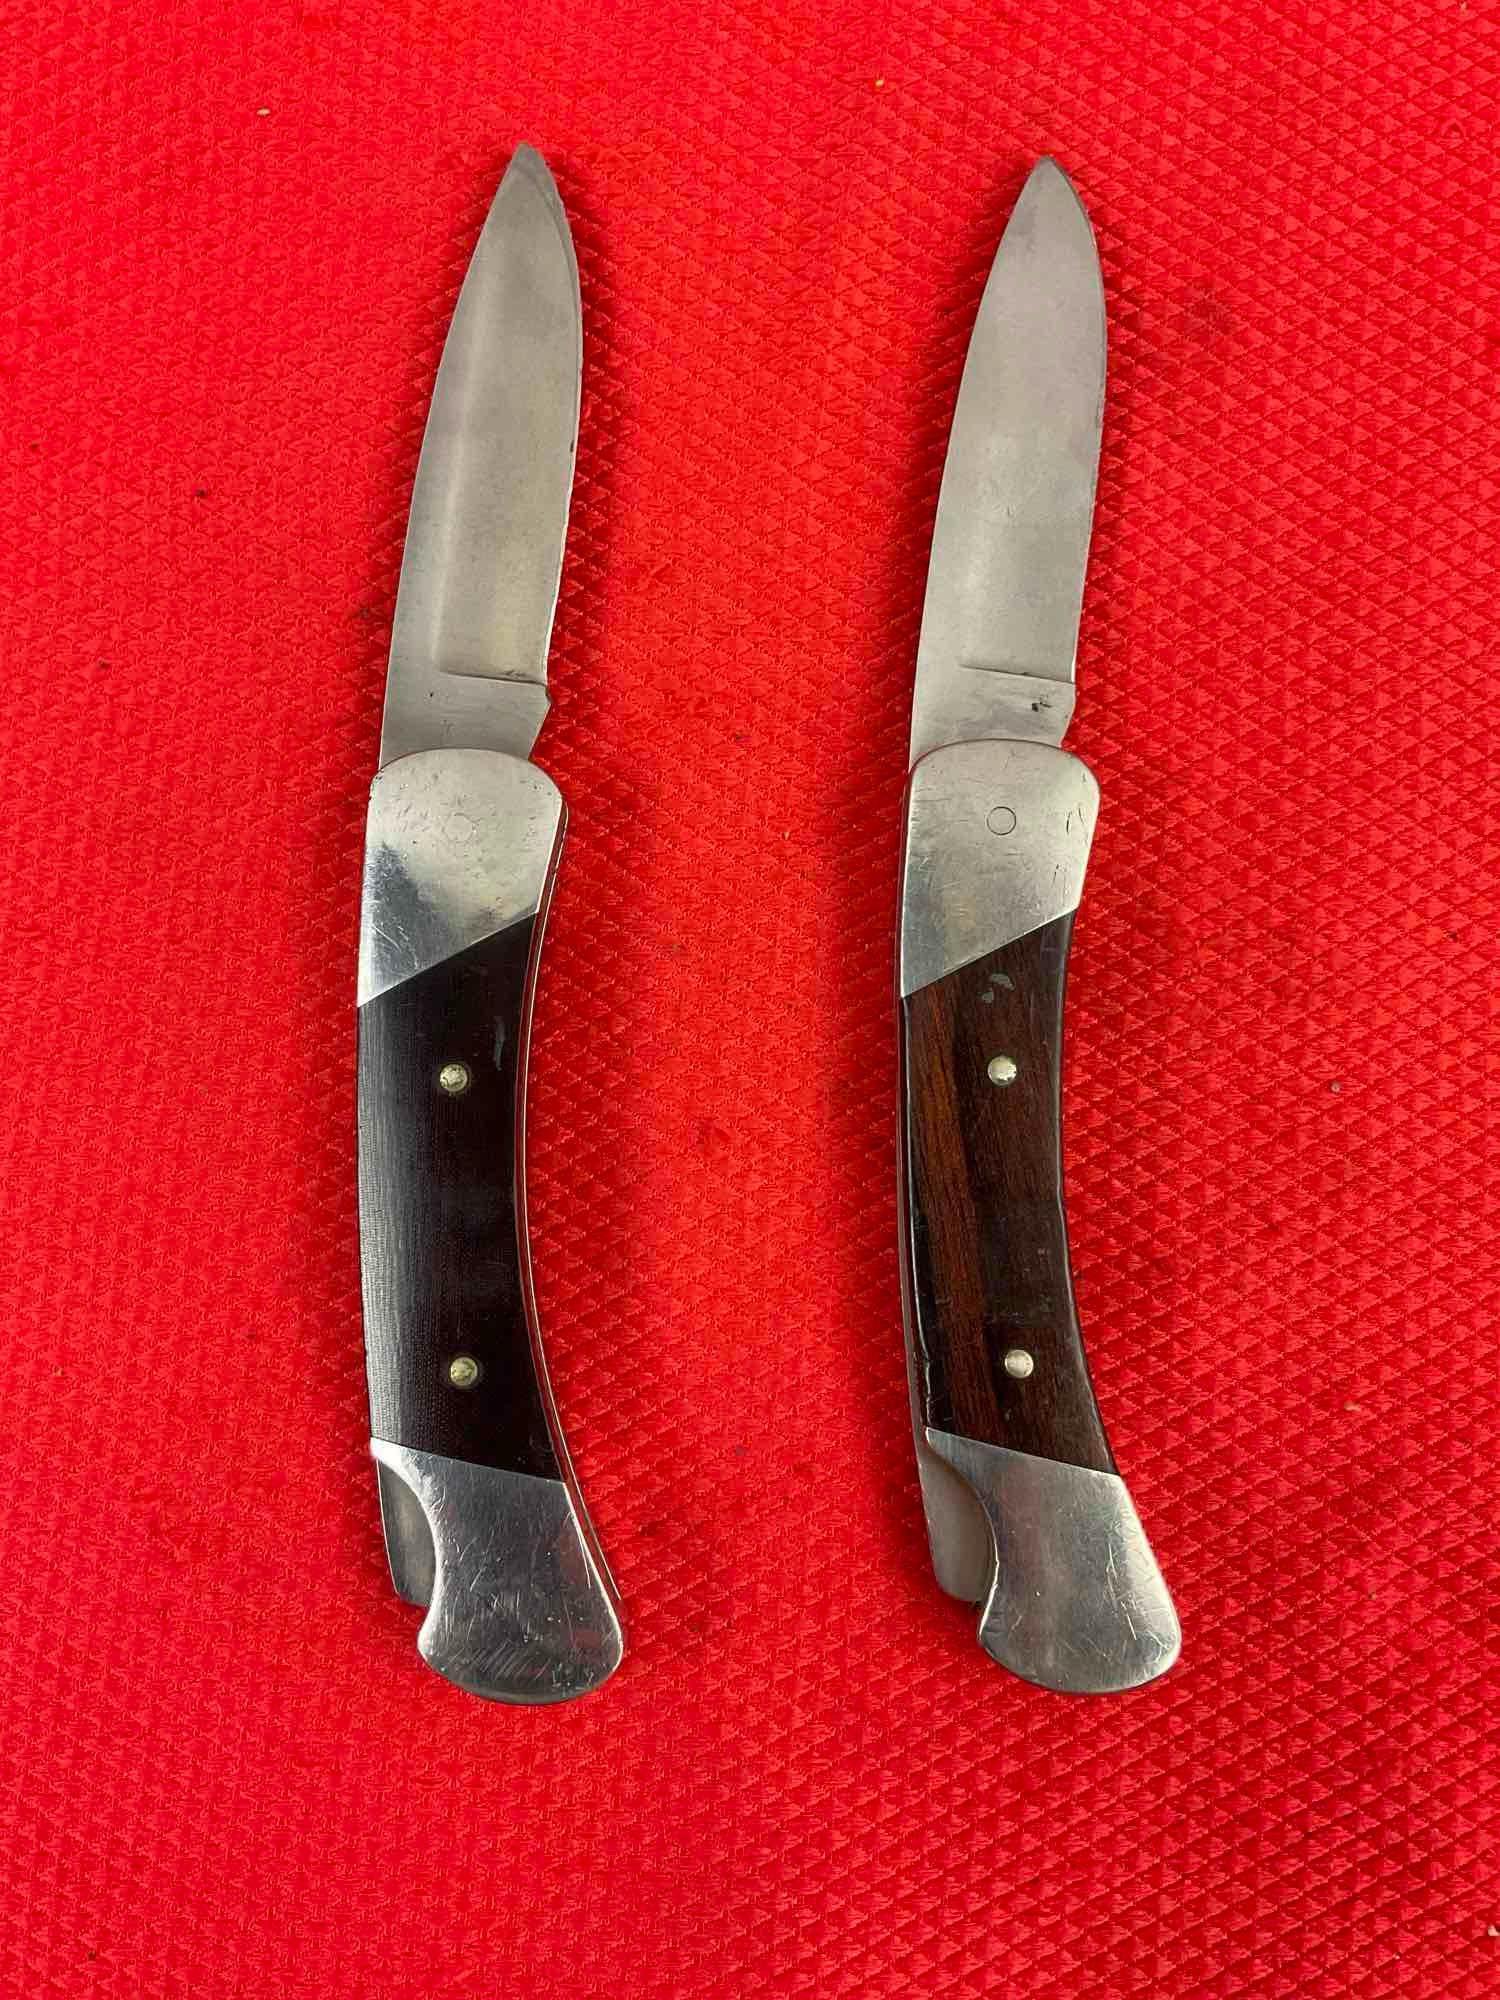 2 pcs Vintage Buck 2.5" Steel Folding Blade Pocket Knives Model 500 Duke w/ Original Sheathes. See